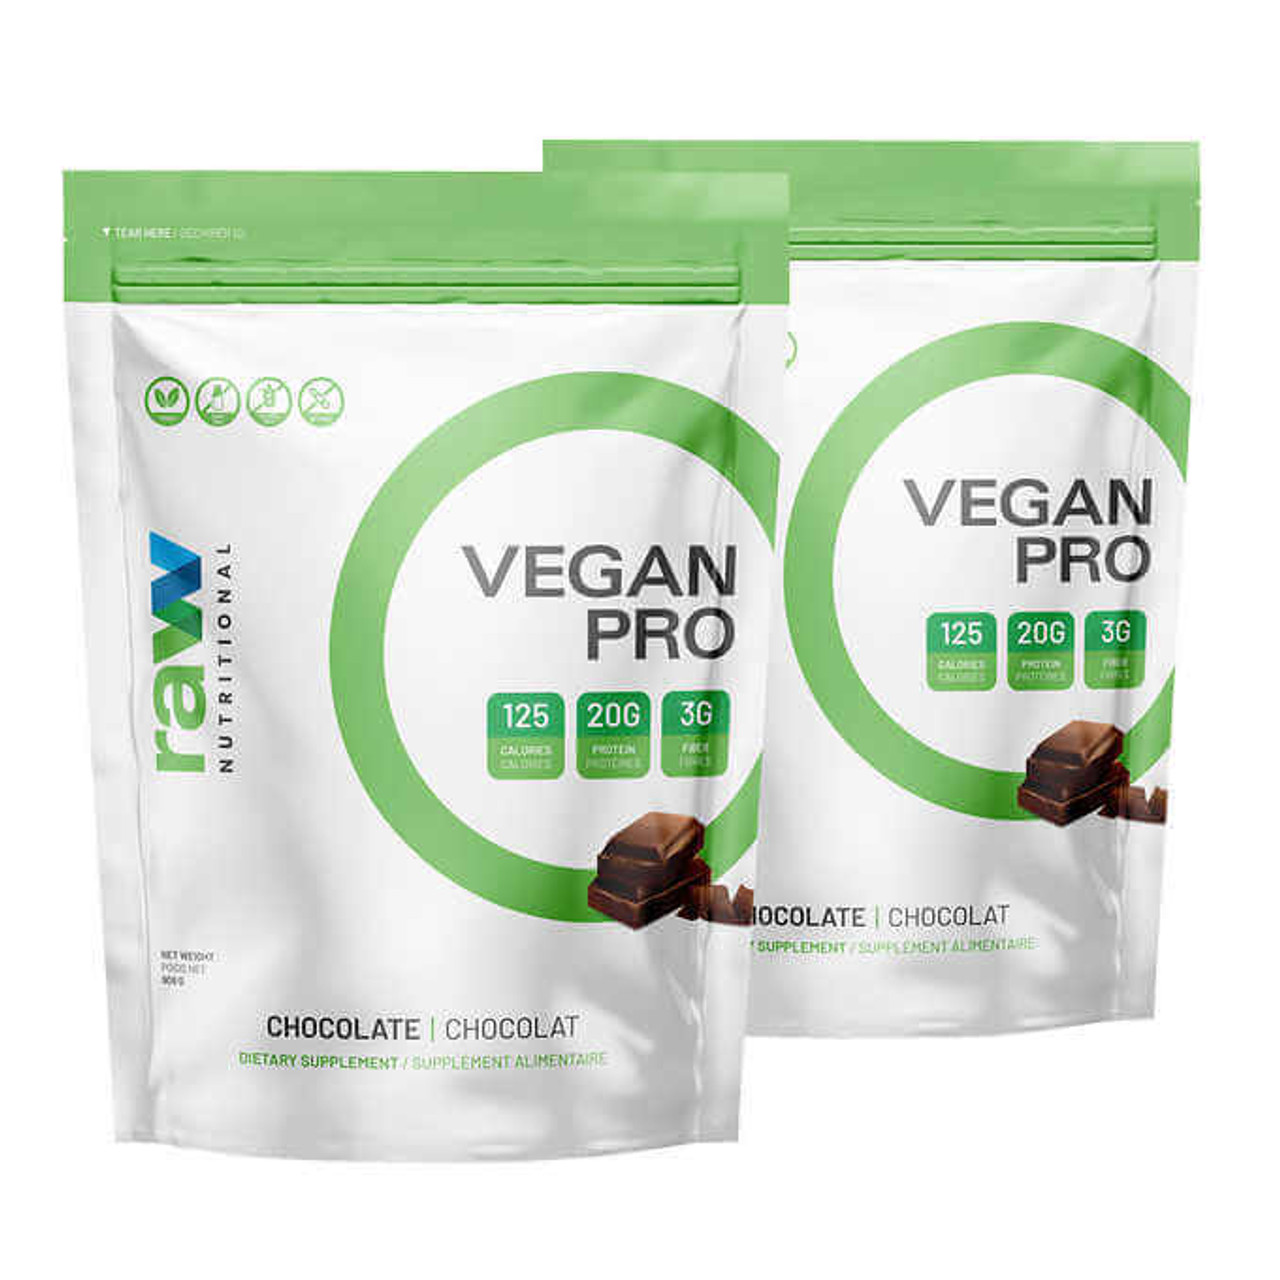 Vegan Pro Plant-Based Protein Powder, 2 x 908g - Natural Protein Source-Chicken Pieces